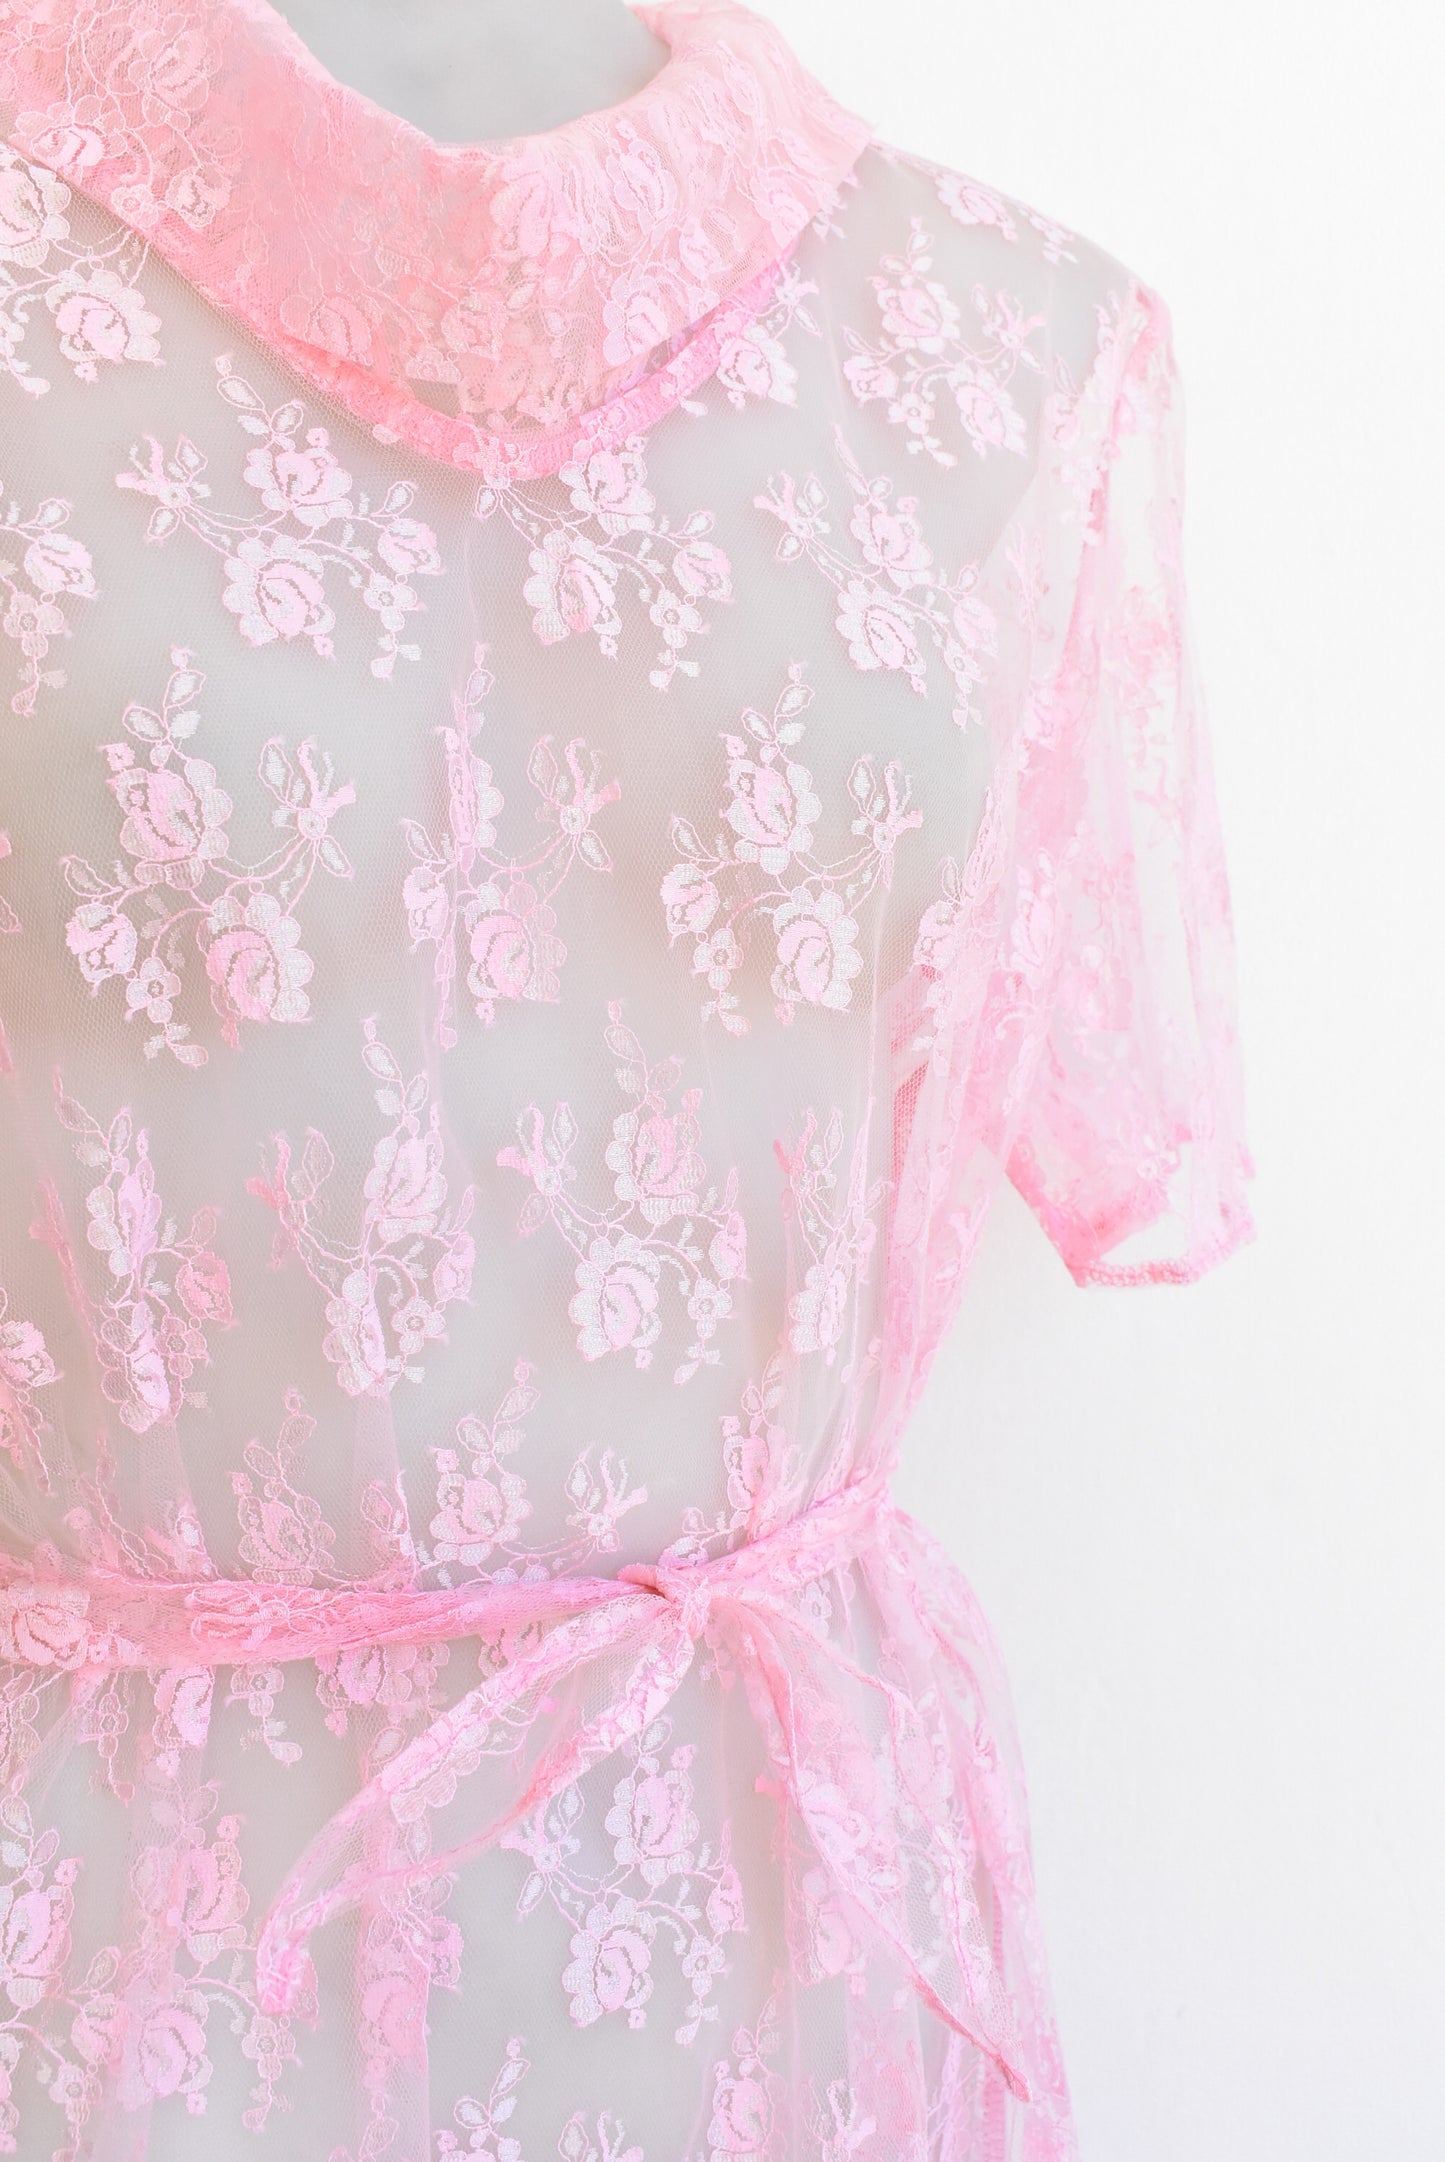 Pink floral lace dress, size S